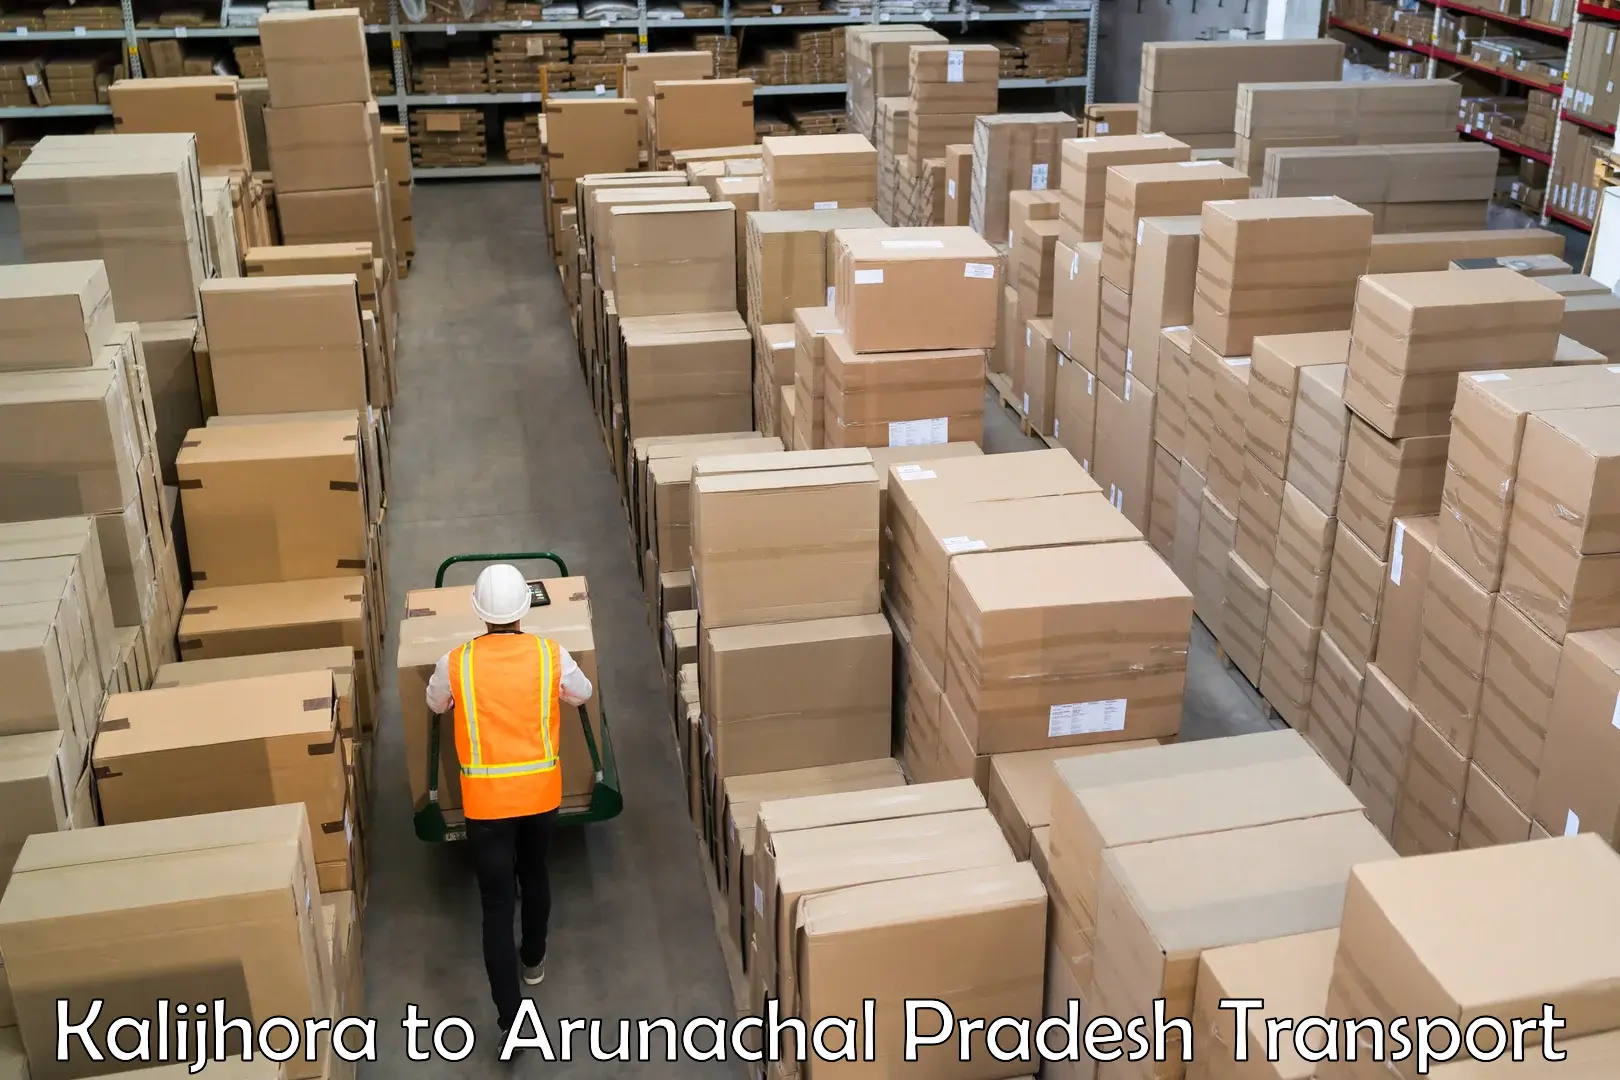 Truck transport companies in India Kalijhora to Arunachal Pradesh